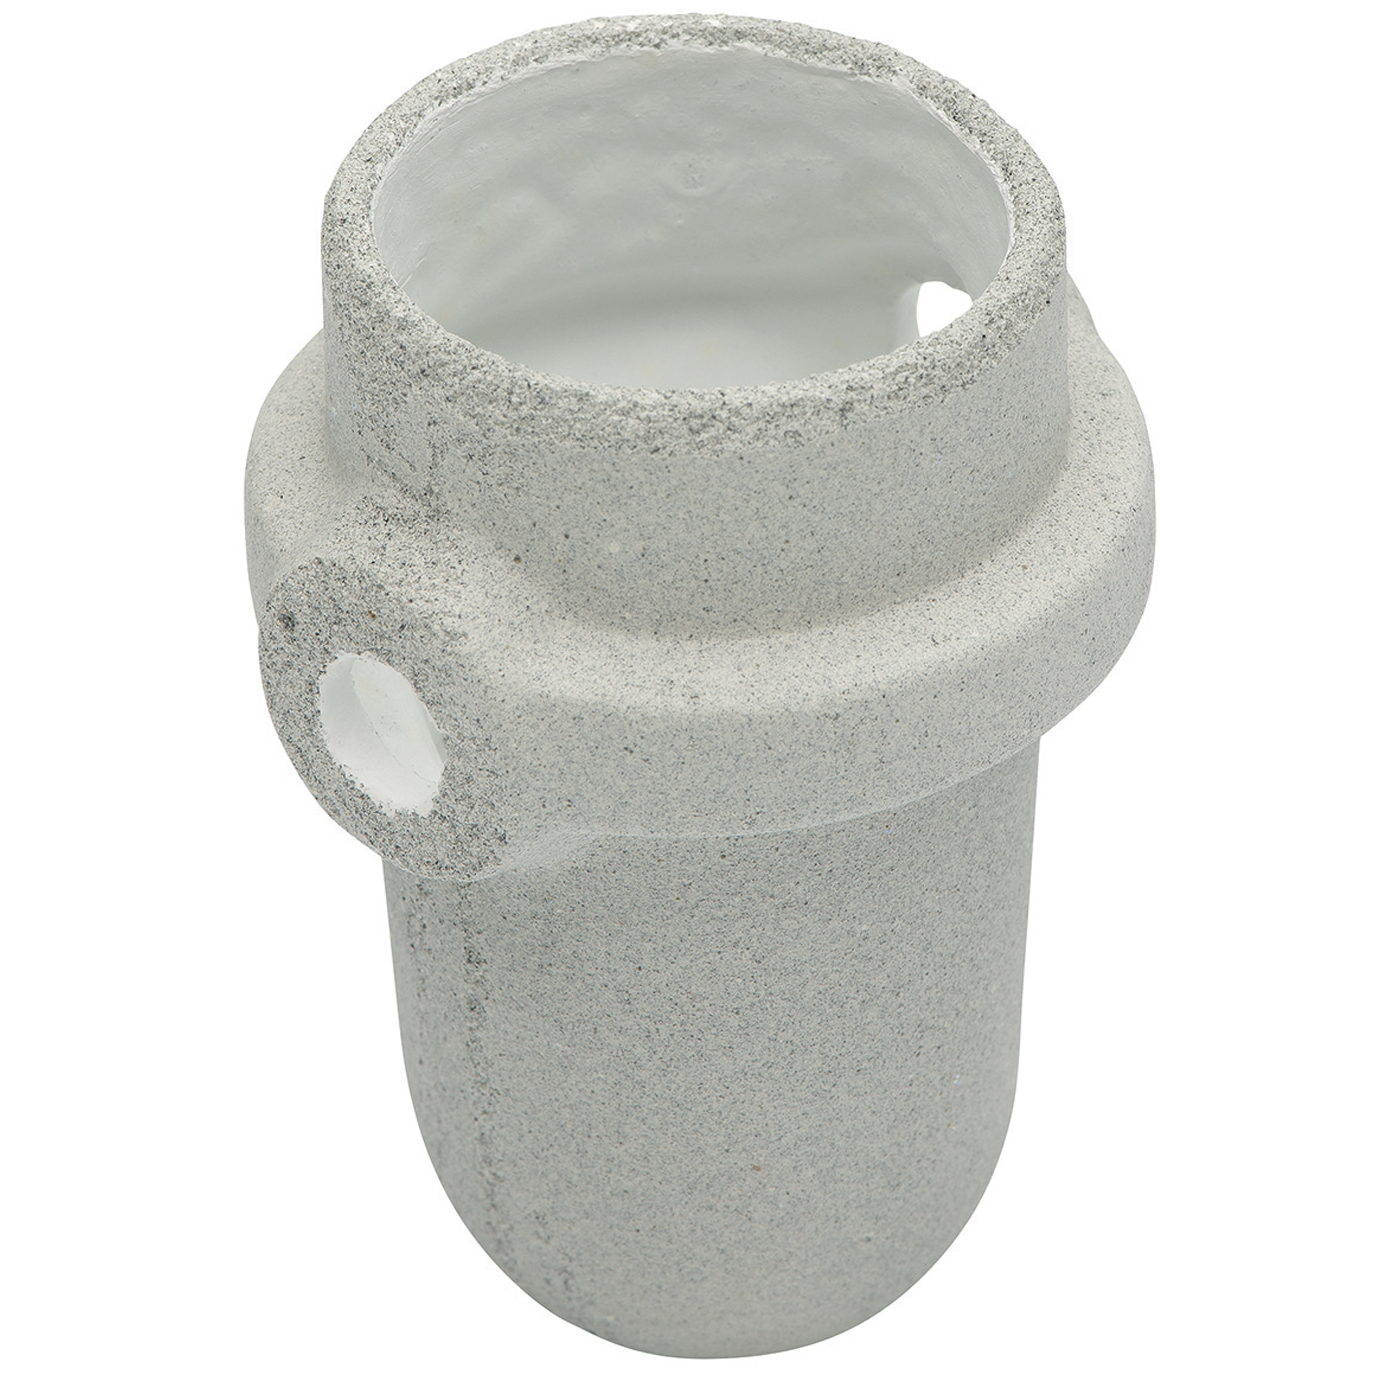 FINO FLOWCAST Ceramic Crucible, for Non-Precious Metal - 5 pieces